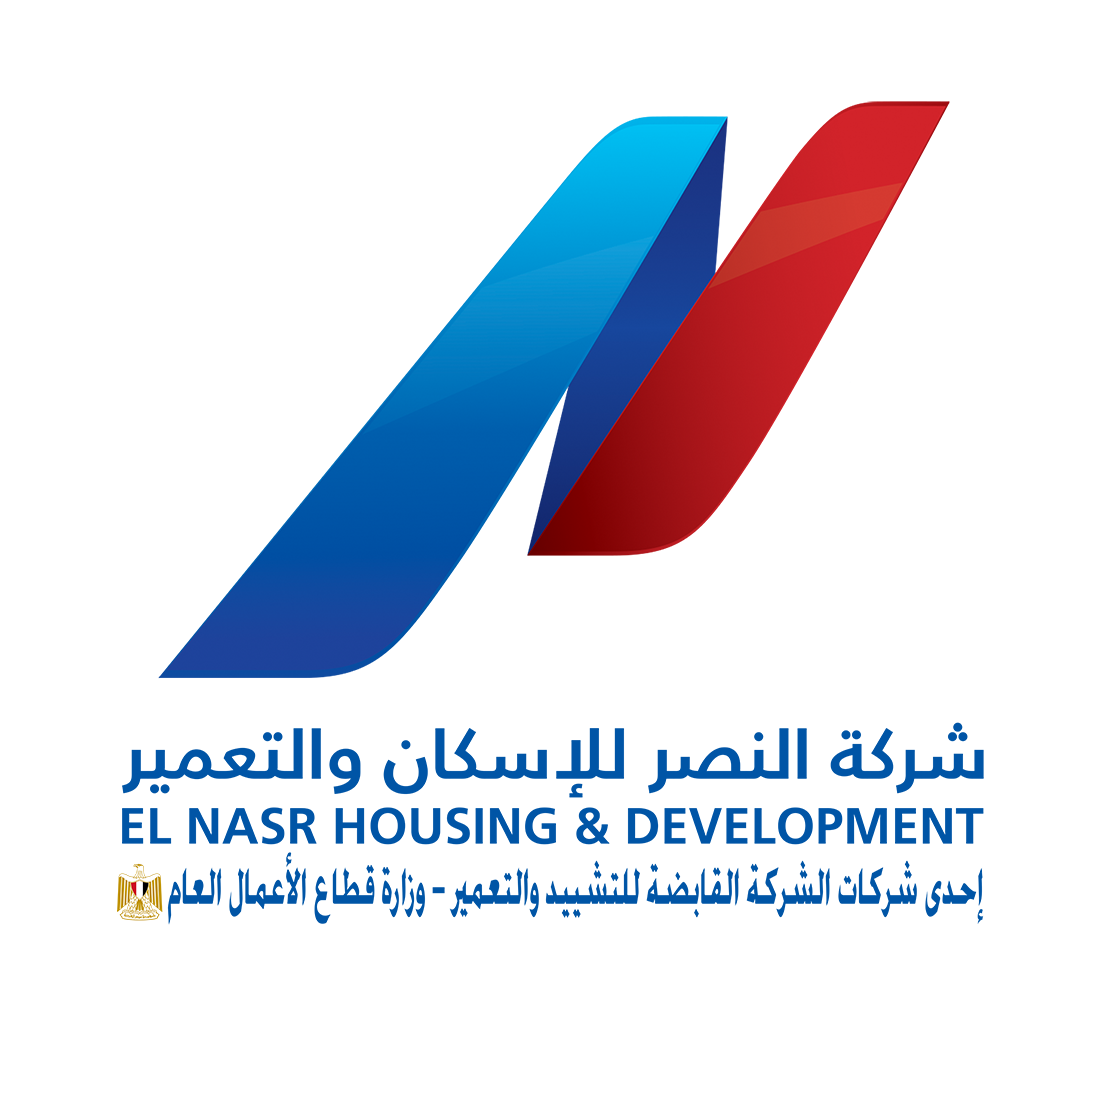 El Nasr Co. For Housing & Development